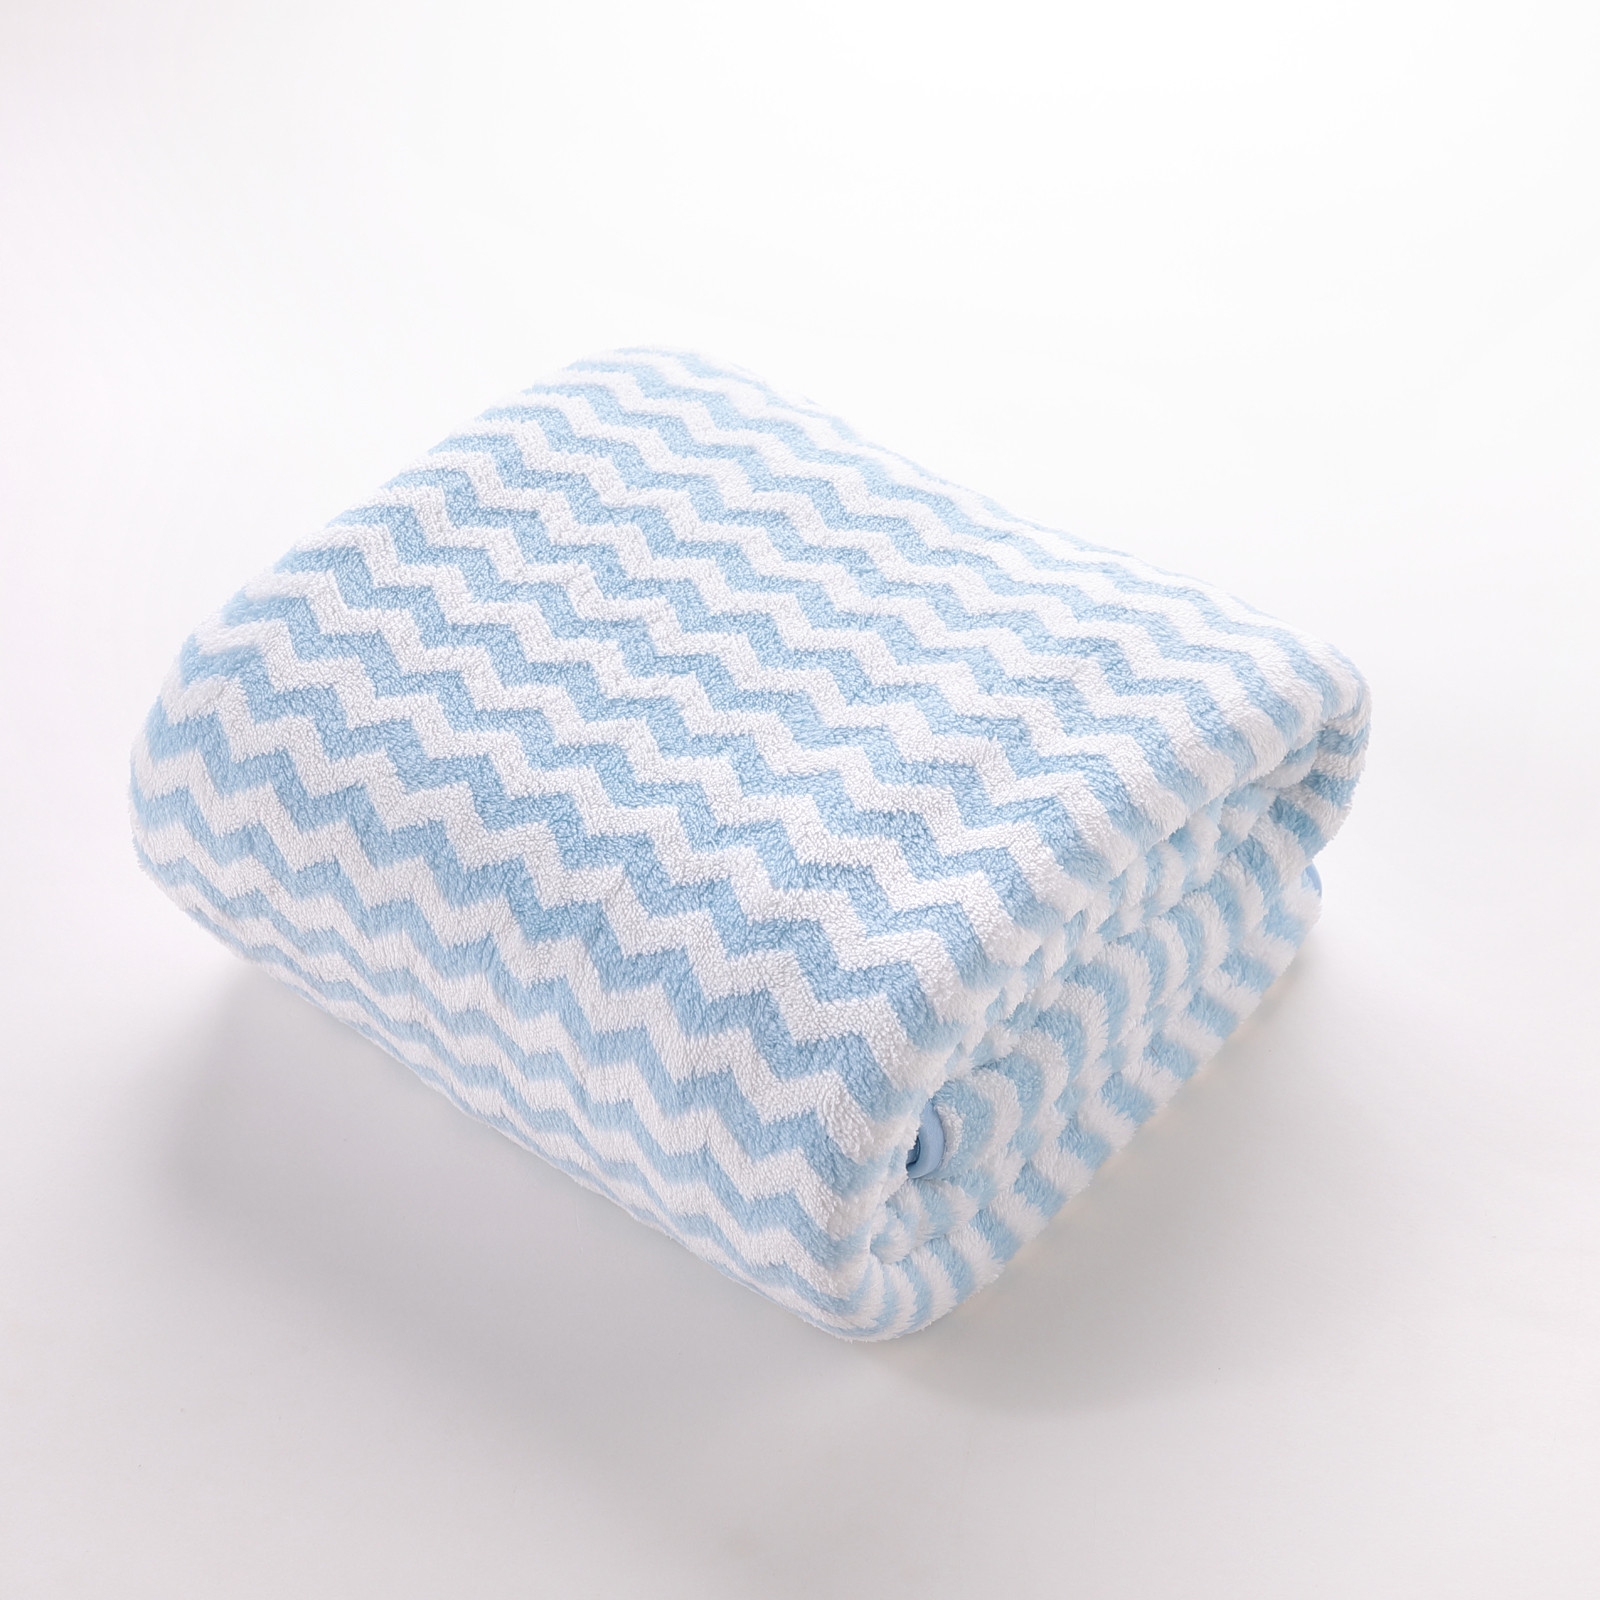 Kuber Industries Bath Towel For Men, Women|280 GSM|Extra Soft & Fade Resistant|Polyester Towels For Bath|Stripes Design|Bathing Towel, Bath Sheet (Blue)